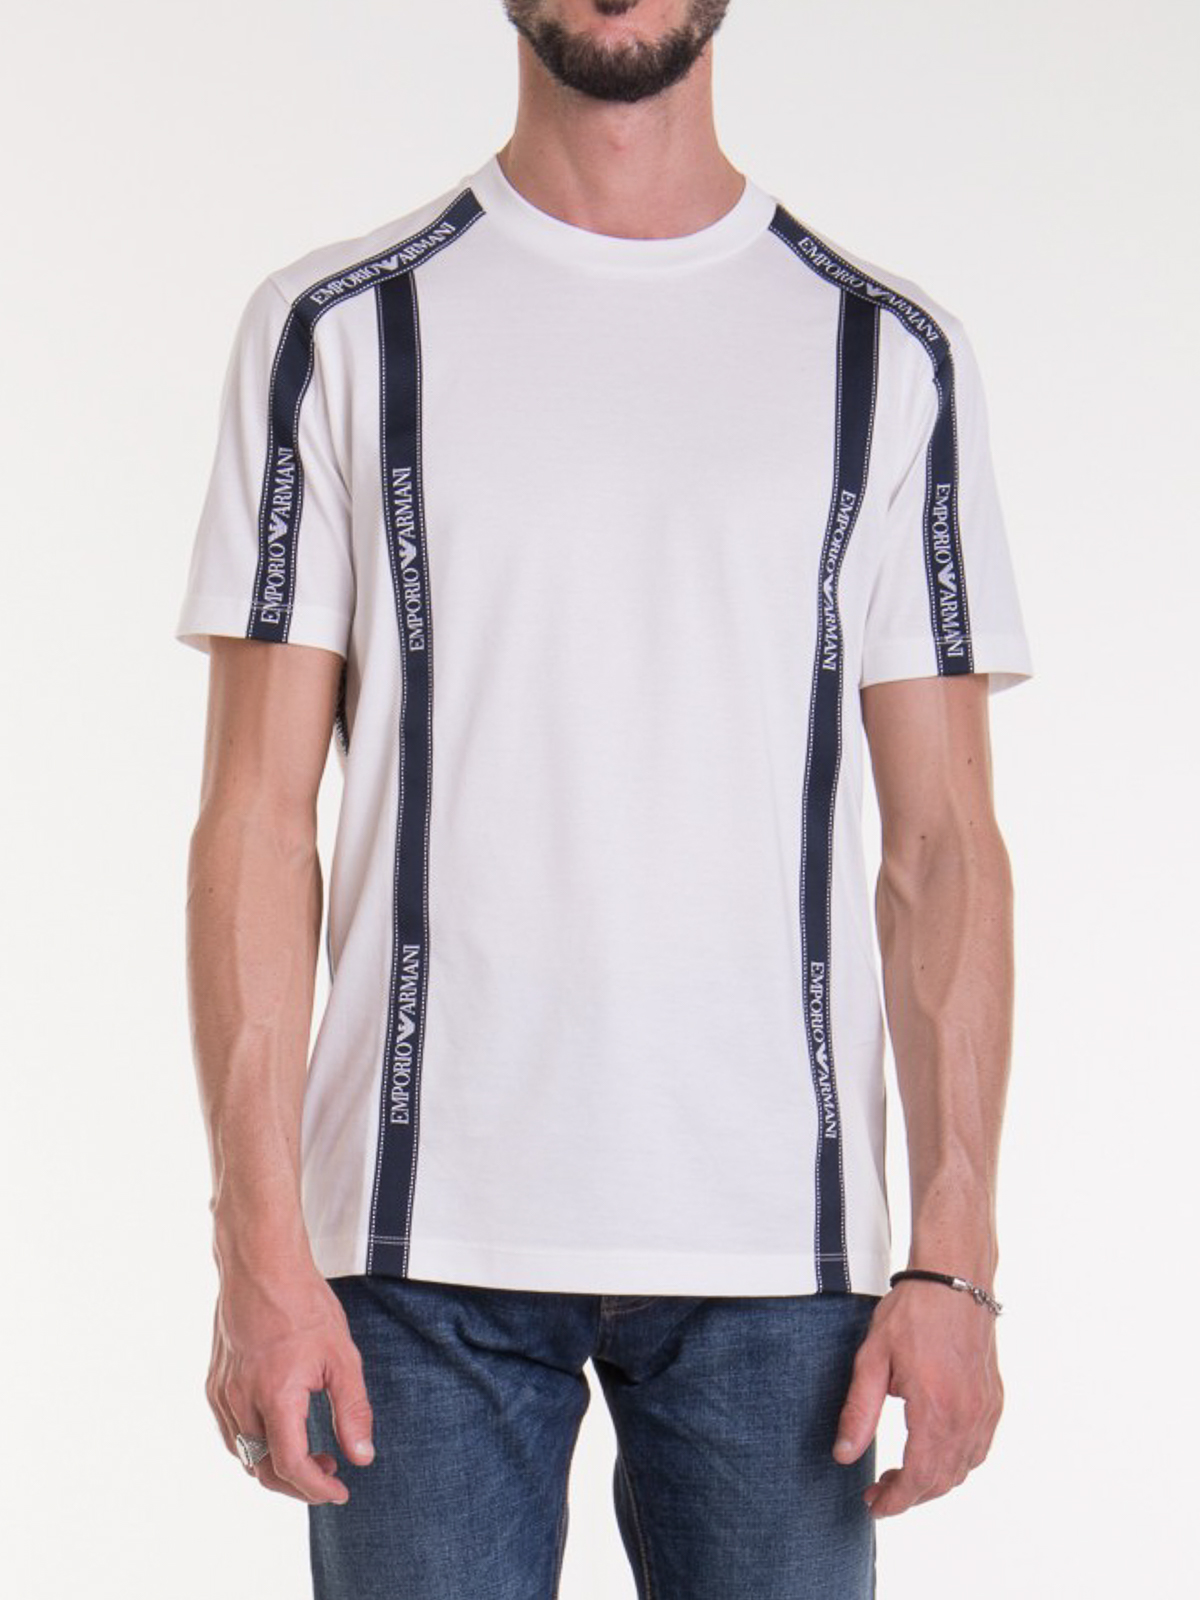 Emporio Armani Logo T Shirt Flash Sales, 54% OFF | www.cremascota.com